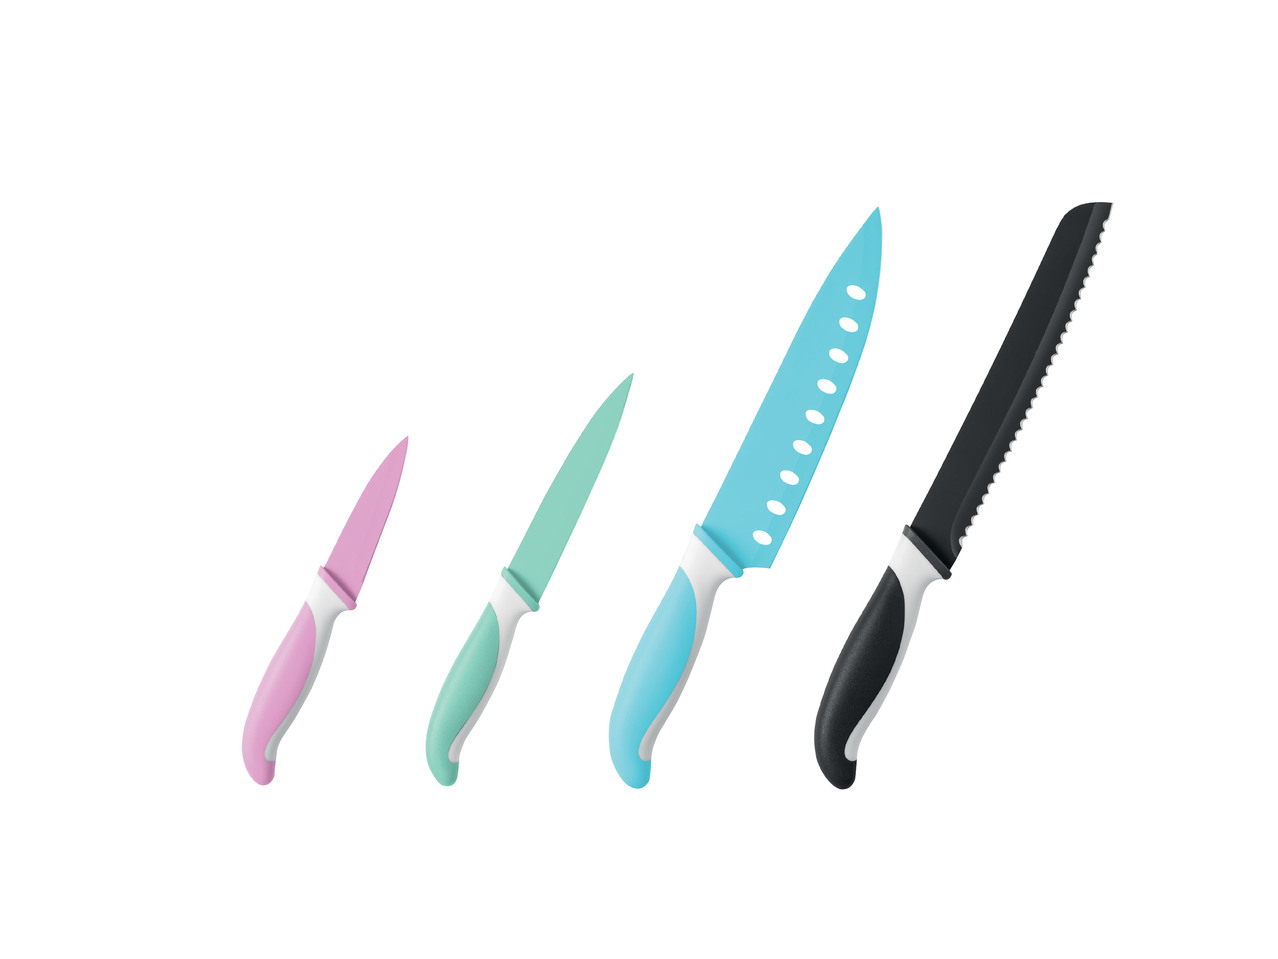 Sada nožů – 4 kusy